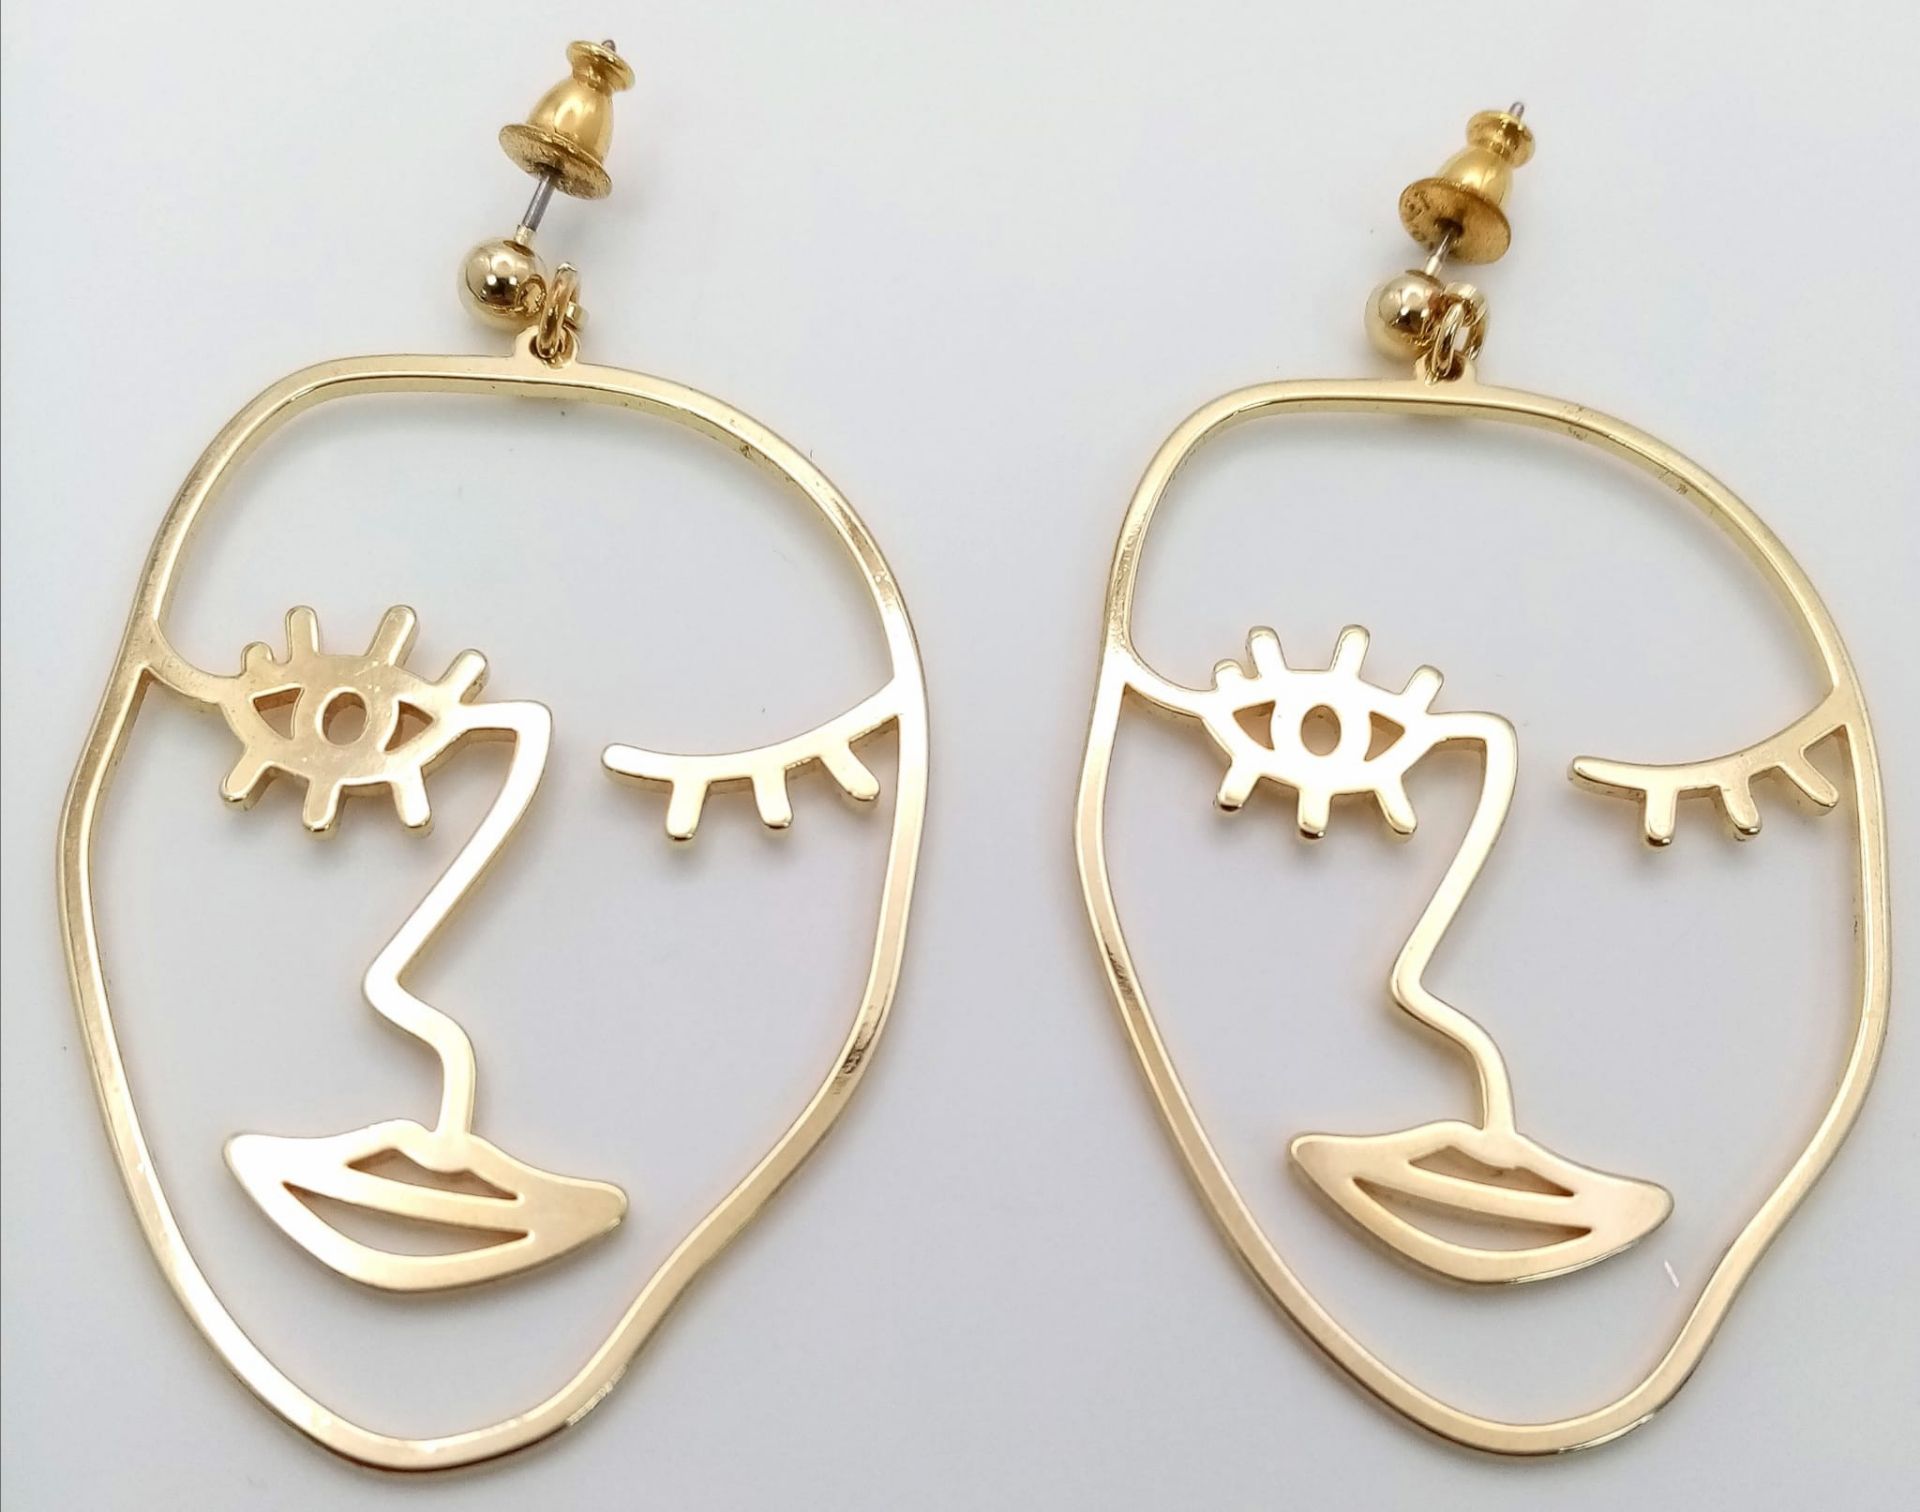 A Pair of Yellow Gold Gilt Art Nouveau Style Earrings by Monet. 6cm Drop